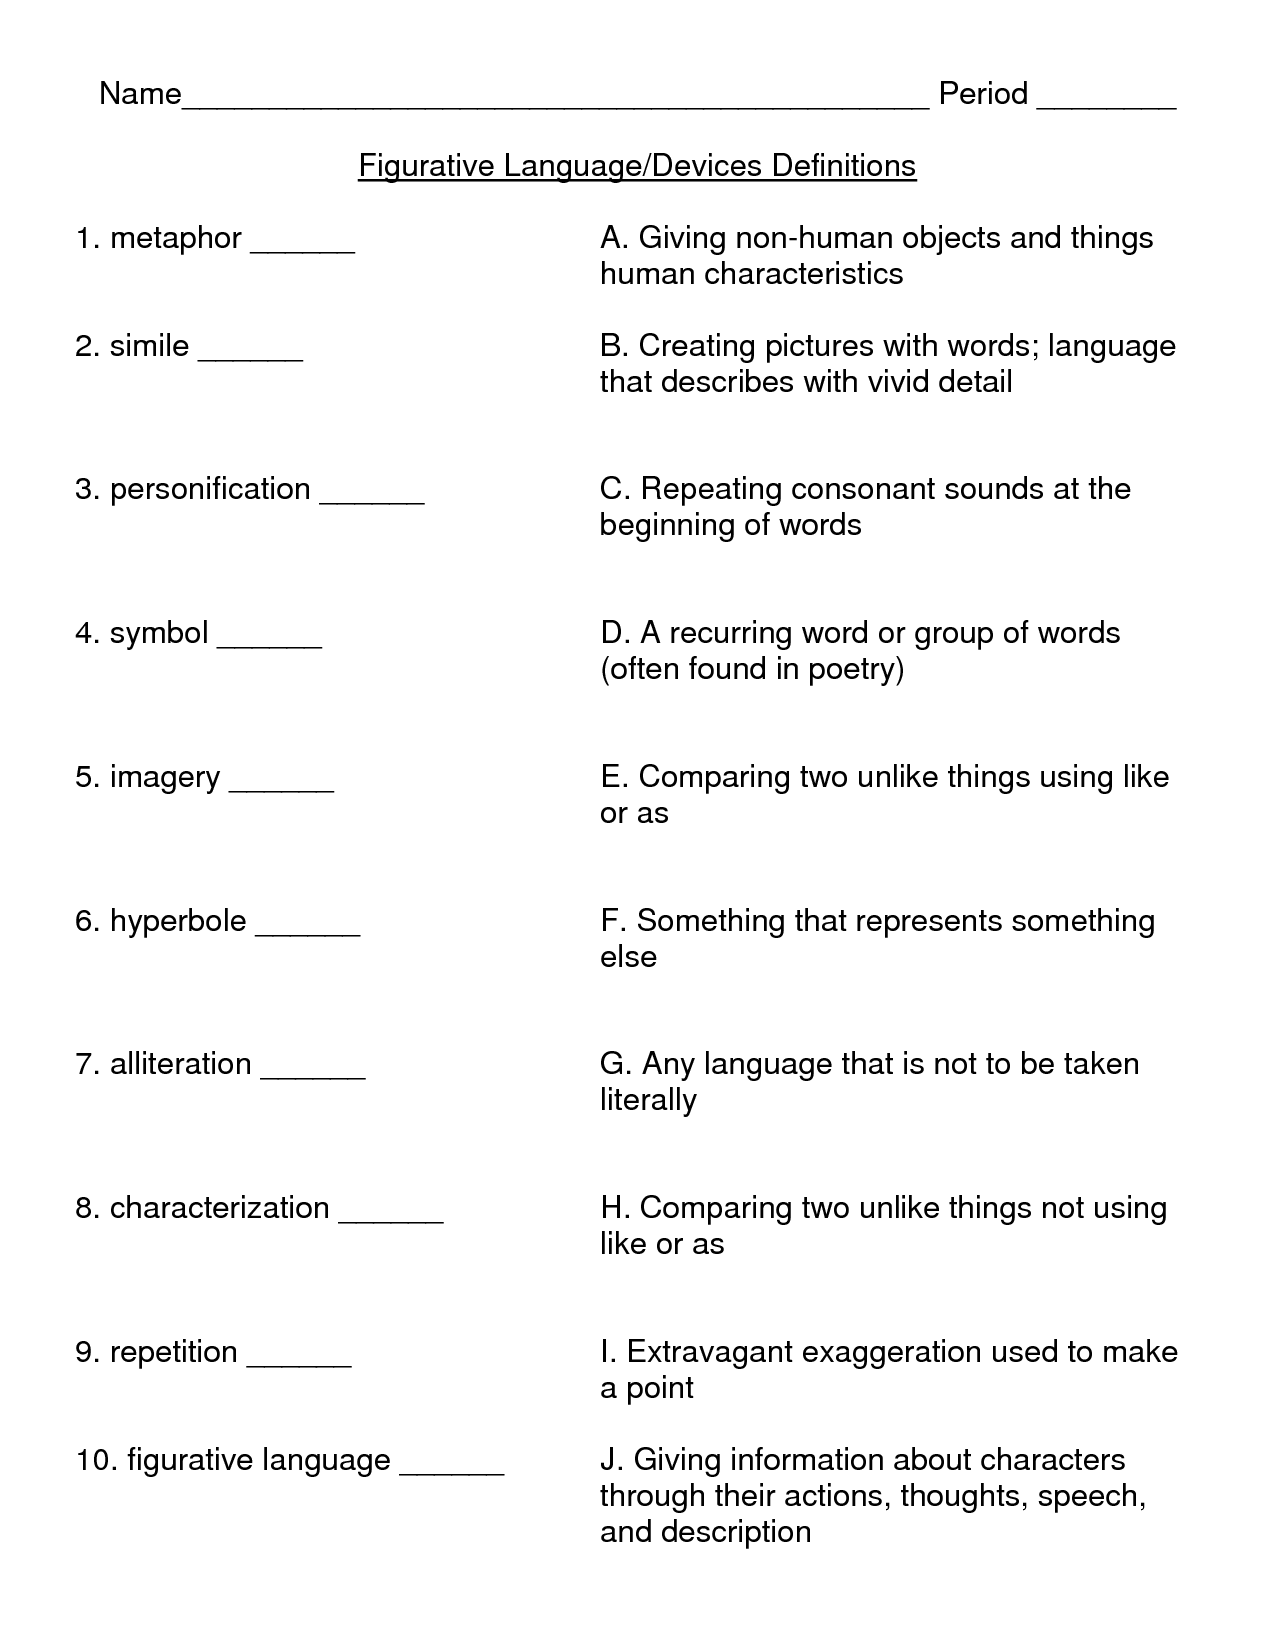 figurative language worksheet education.com